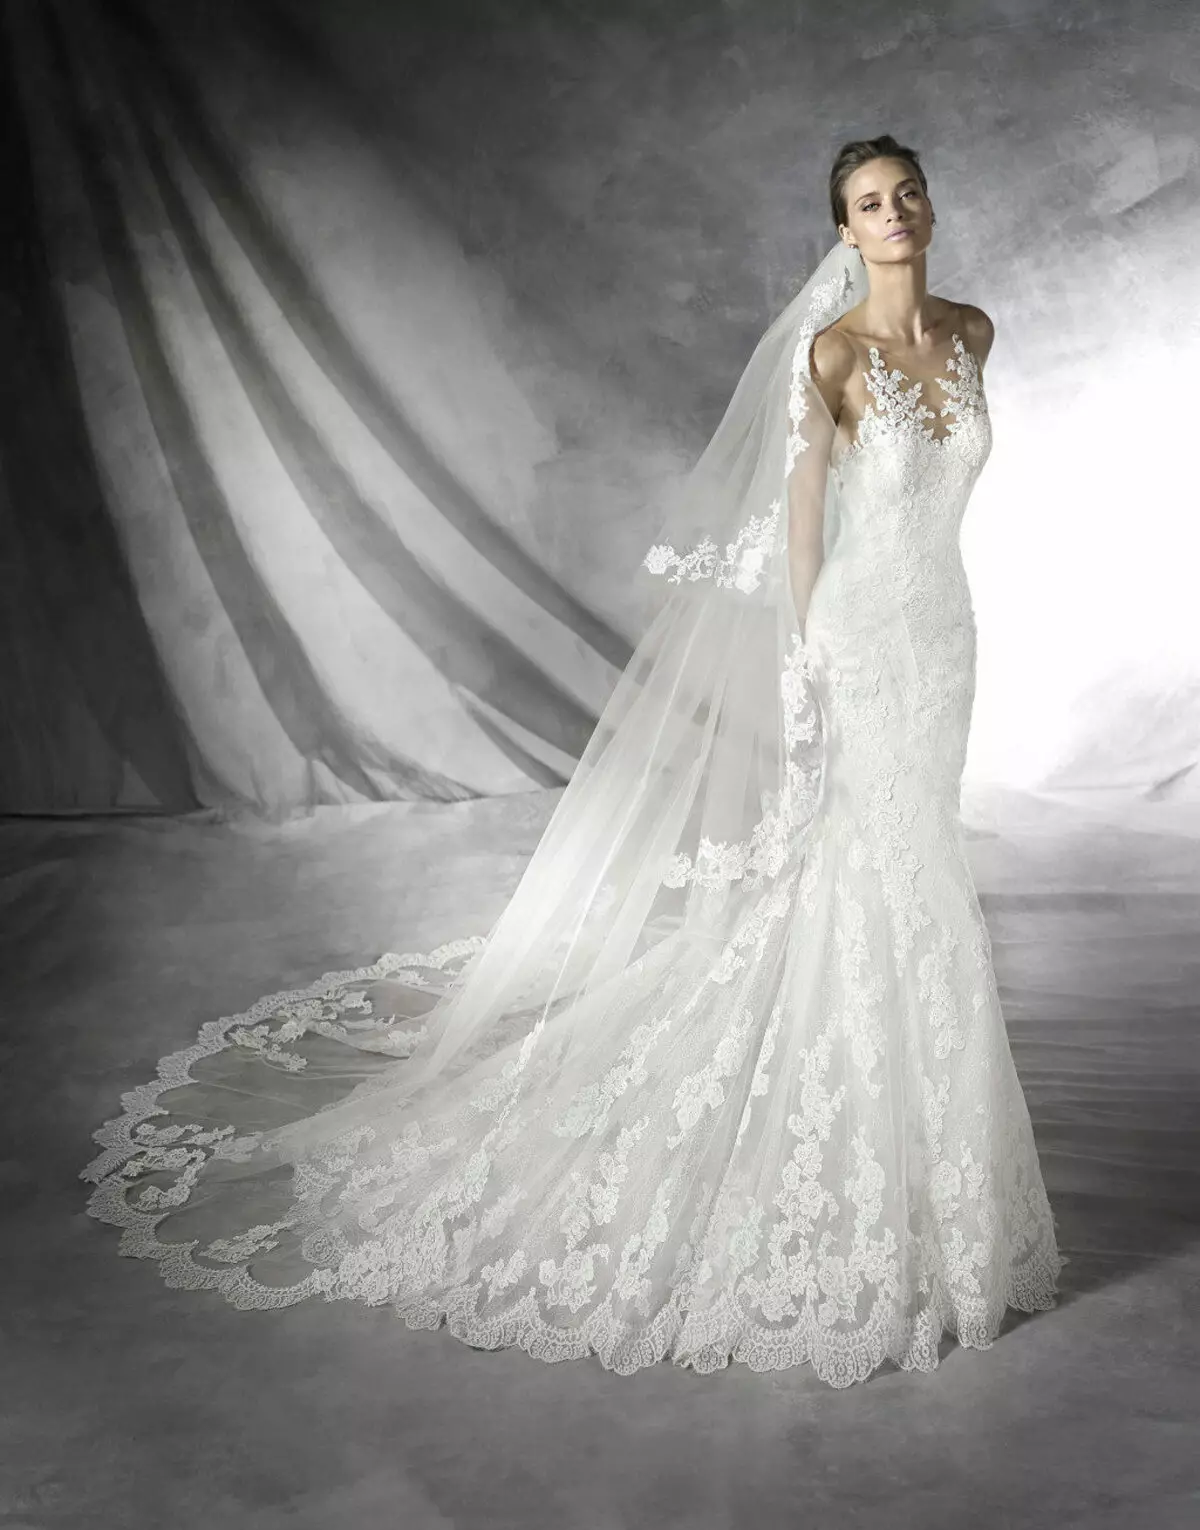 Gaun pengantin dari taffeta dengan bahu terbuka